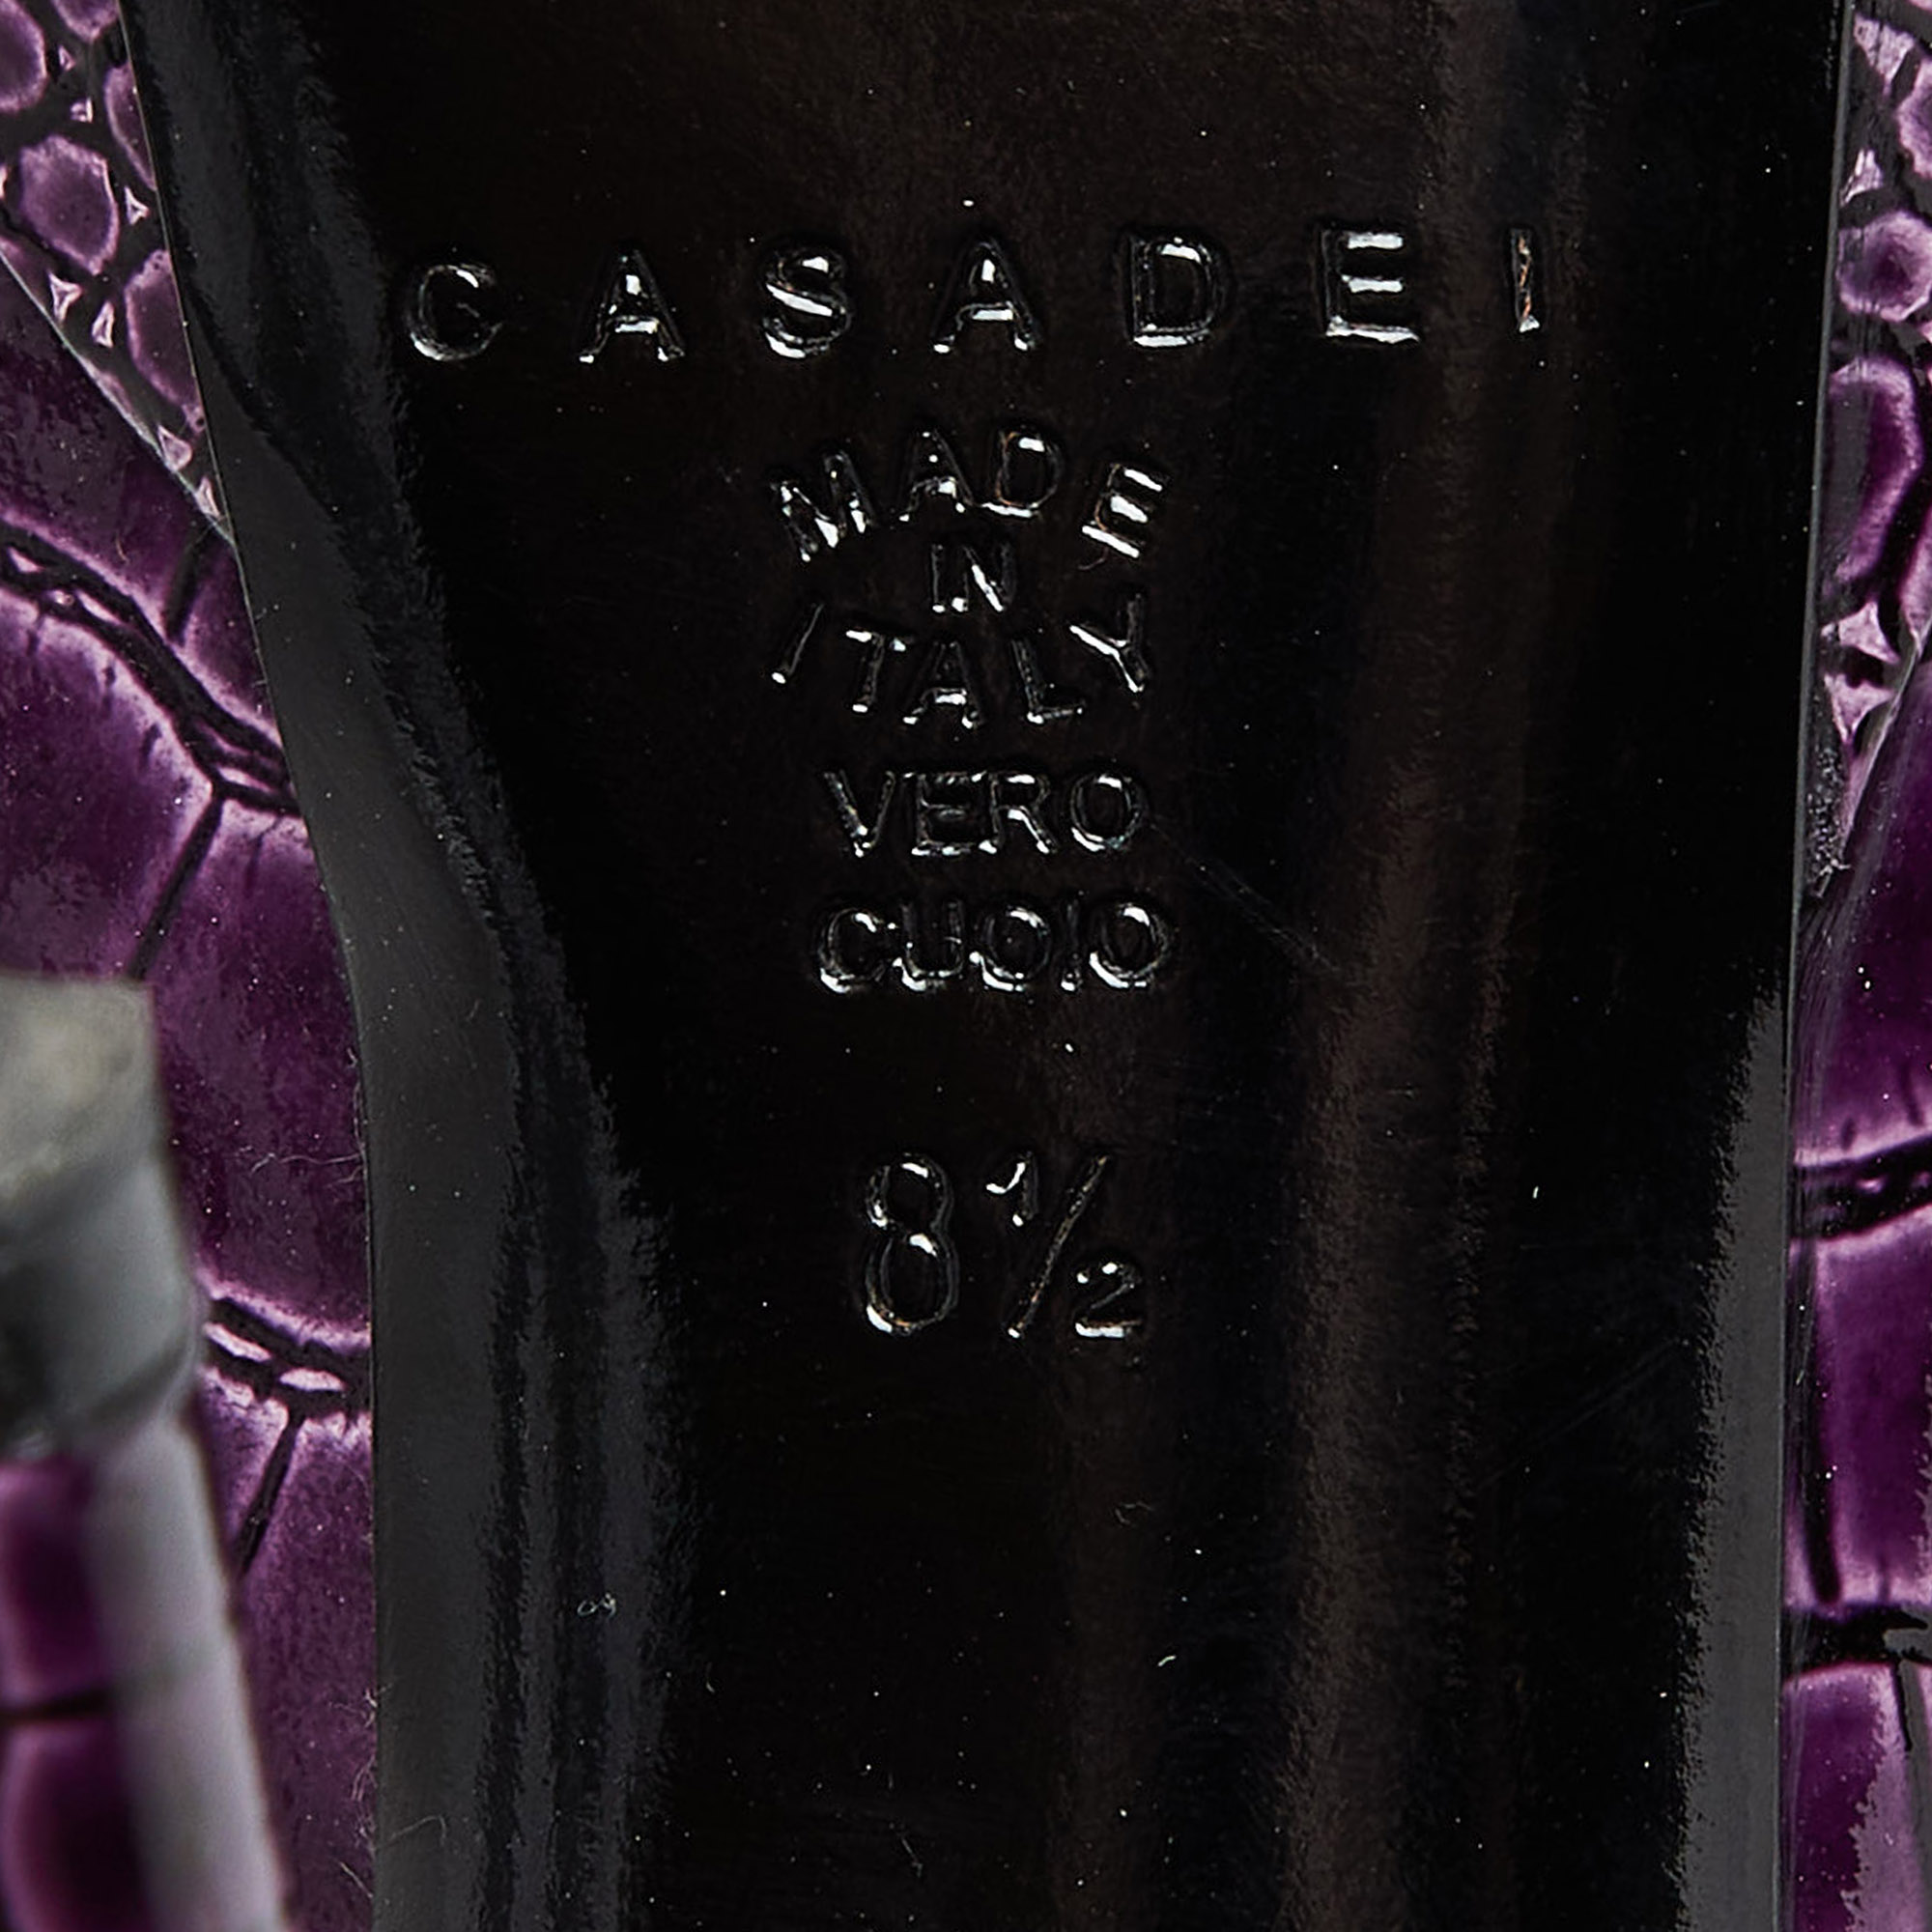 Casadei Purple Croc Embossed Patent Leather Mid Calf Platform Boots Size 38.5